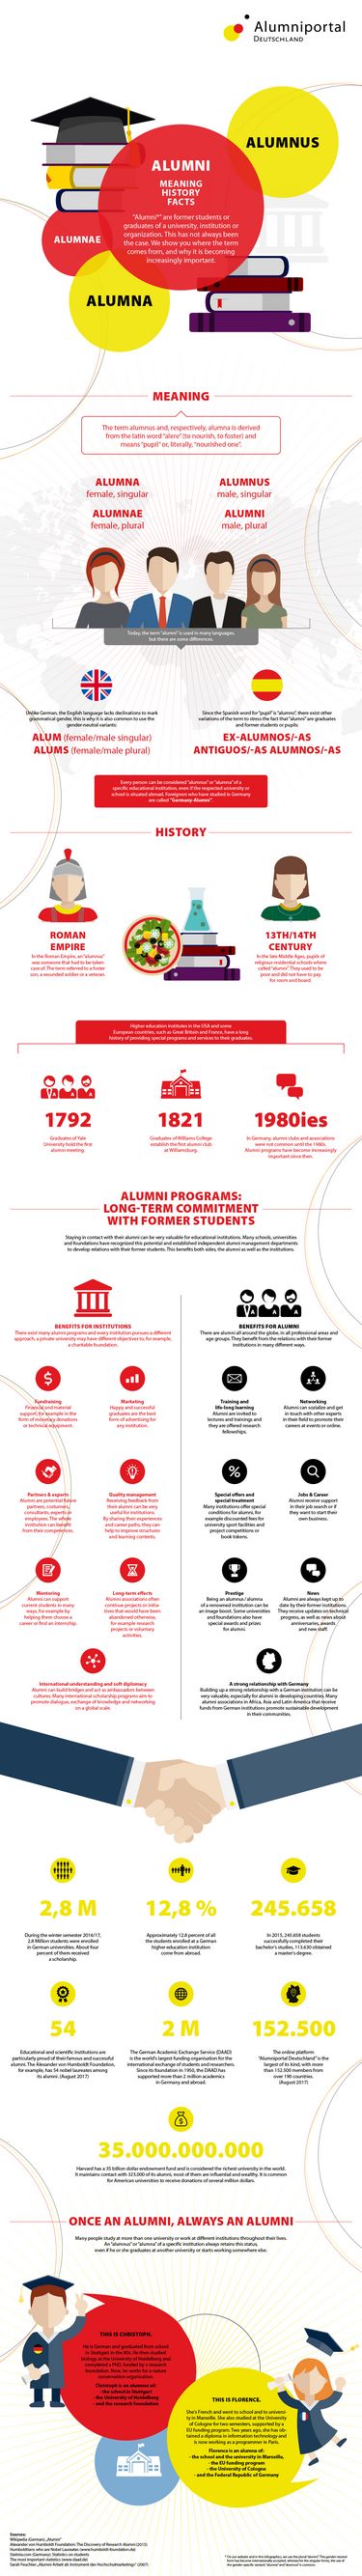 Infographic on alumni